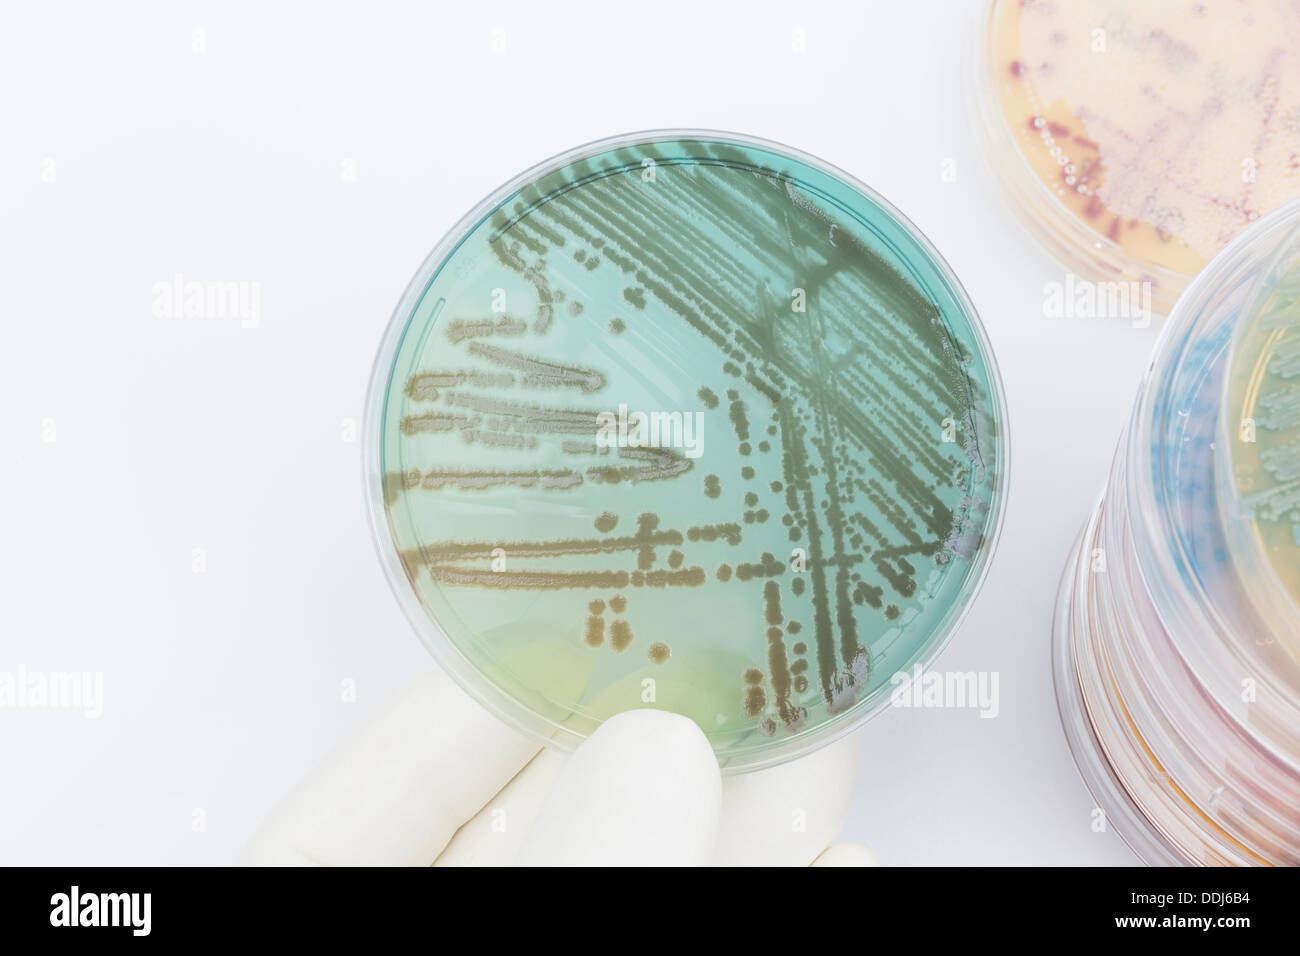 Human hand holding petri dish with bacteria, close up Stock Photo